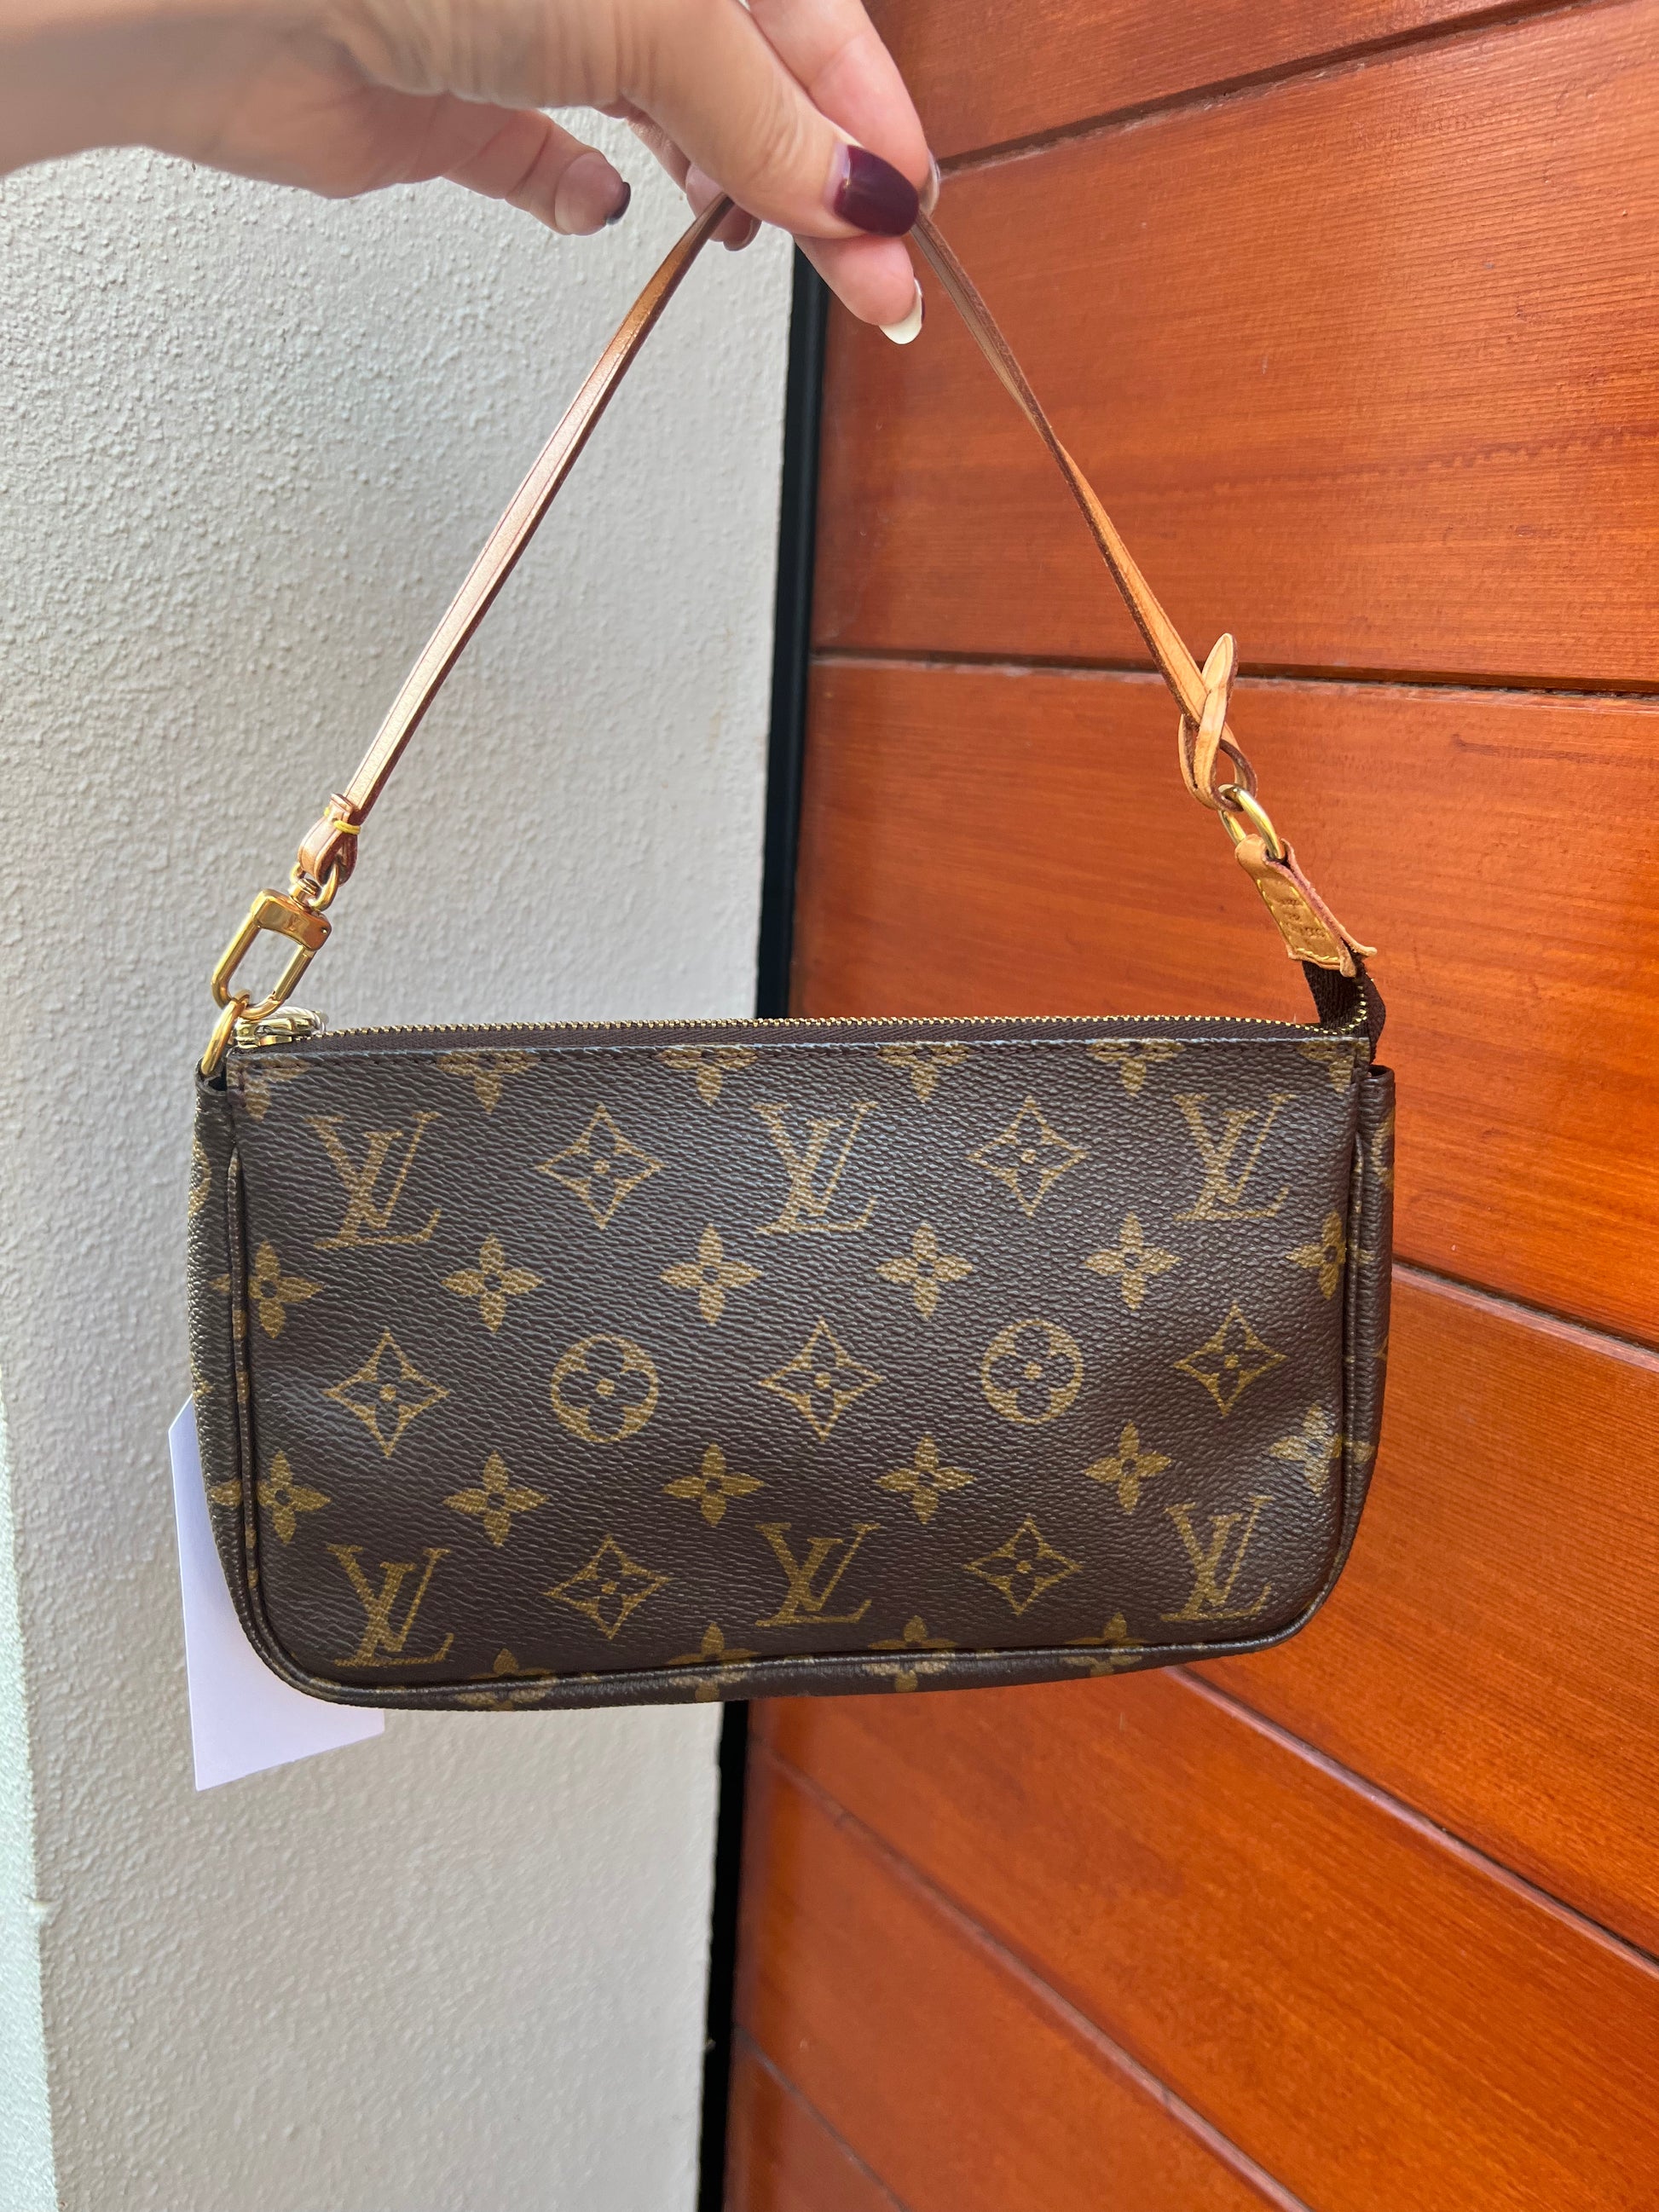 Pre-loved Louis Vuitton Pochette Accessoire Handbag Monogram